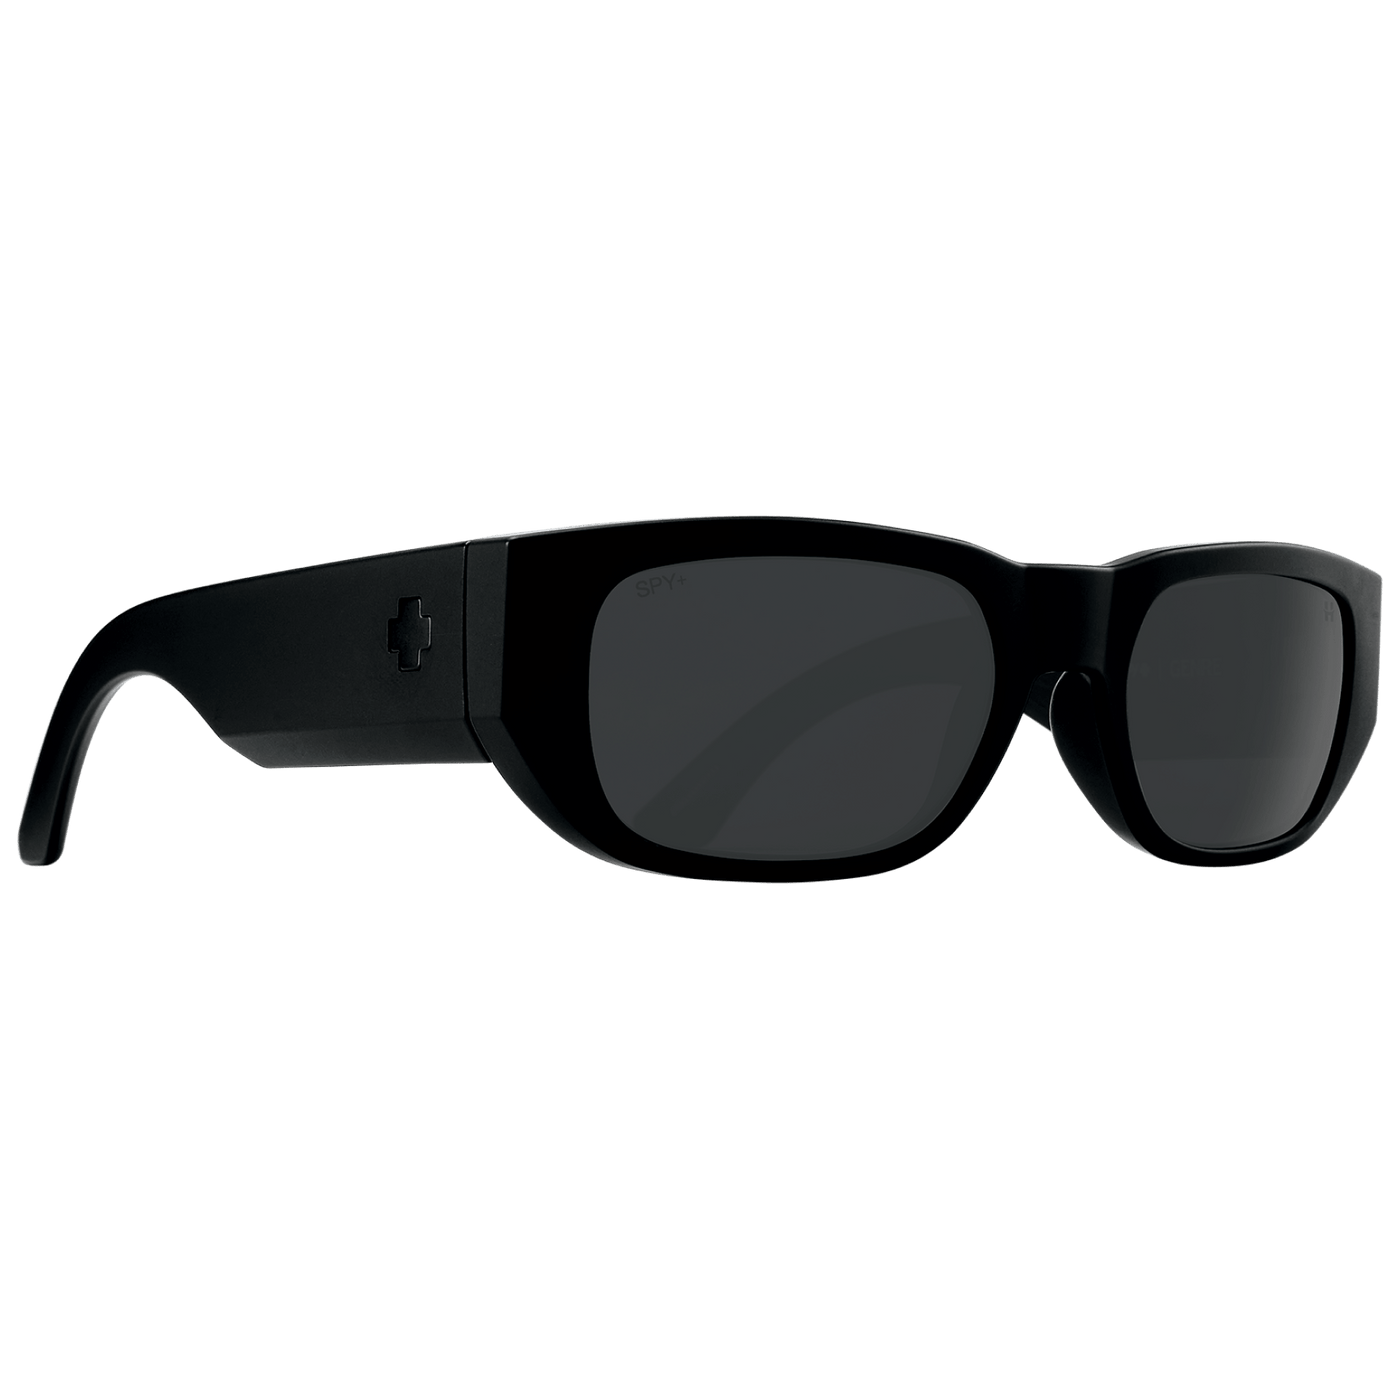 SPY GENRE Polarized Sunglasses, Happy Lens - Matte Black 8Lines Shop - Fast Shipping